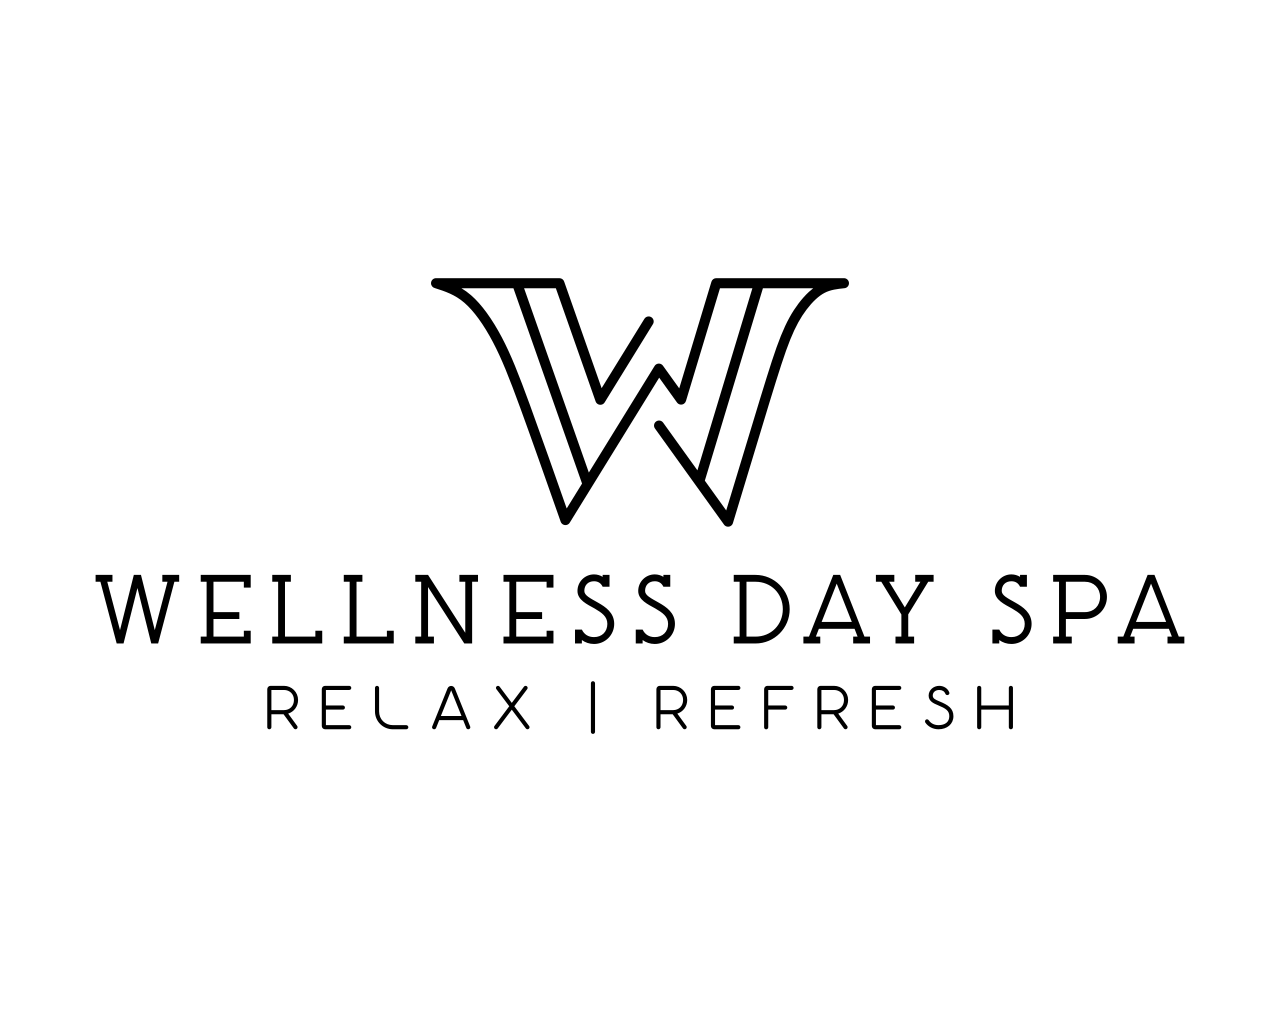 Wellness Day Spa, LLC